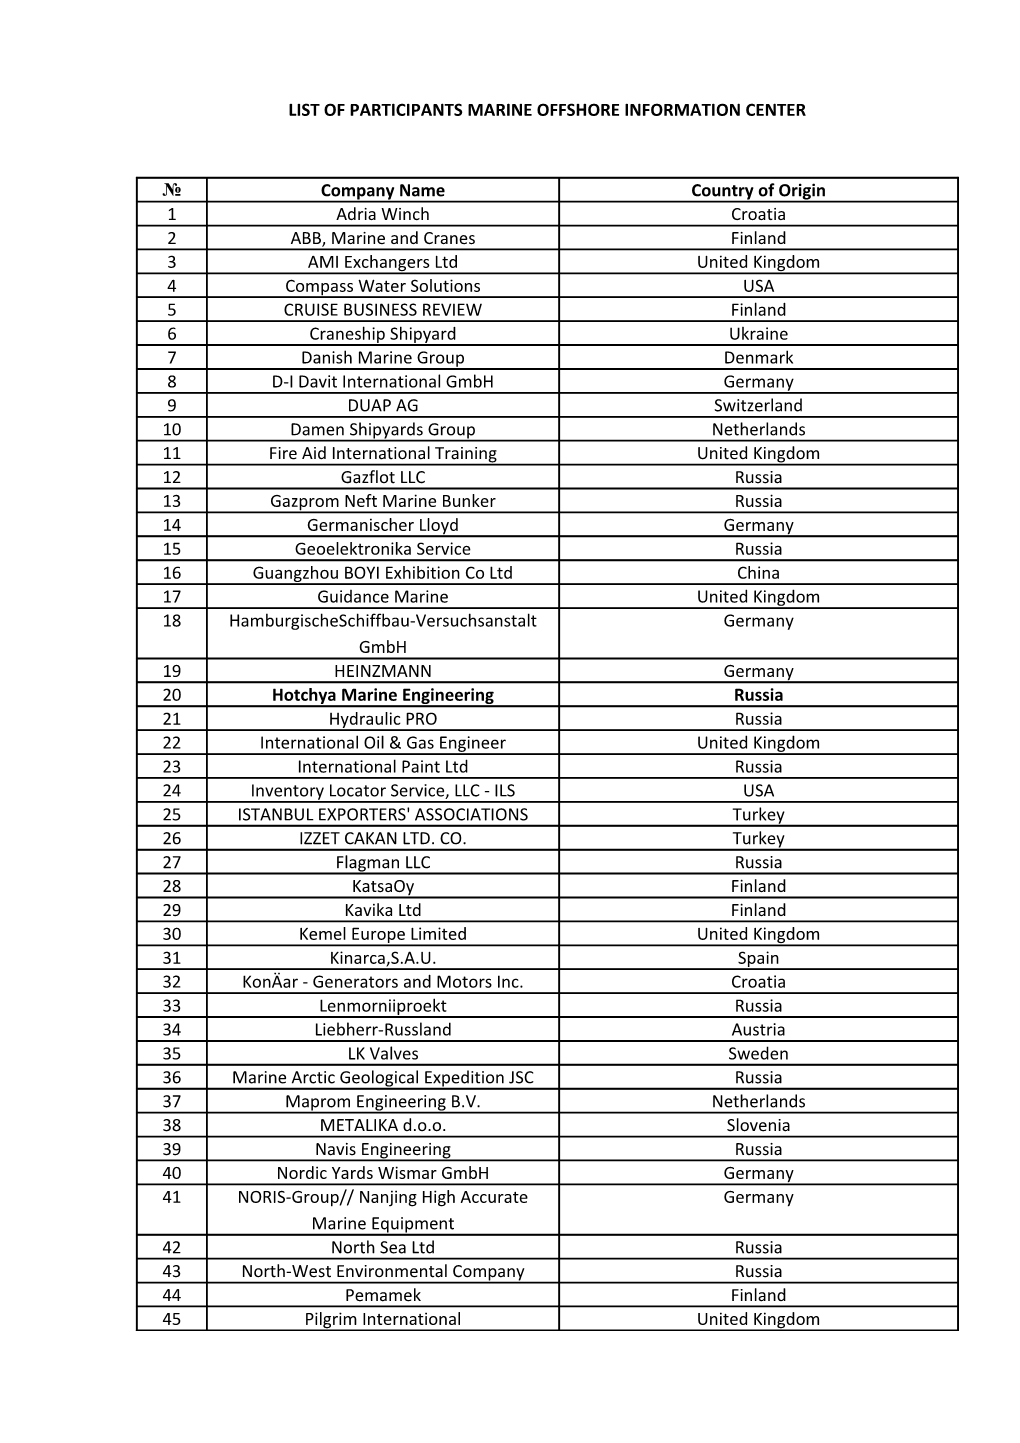 List of Participants Marine Offshore Information Center